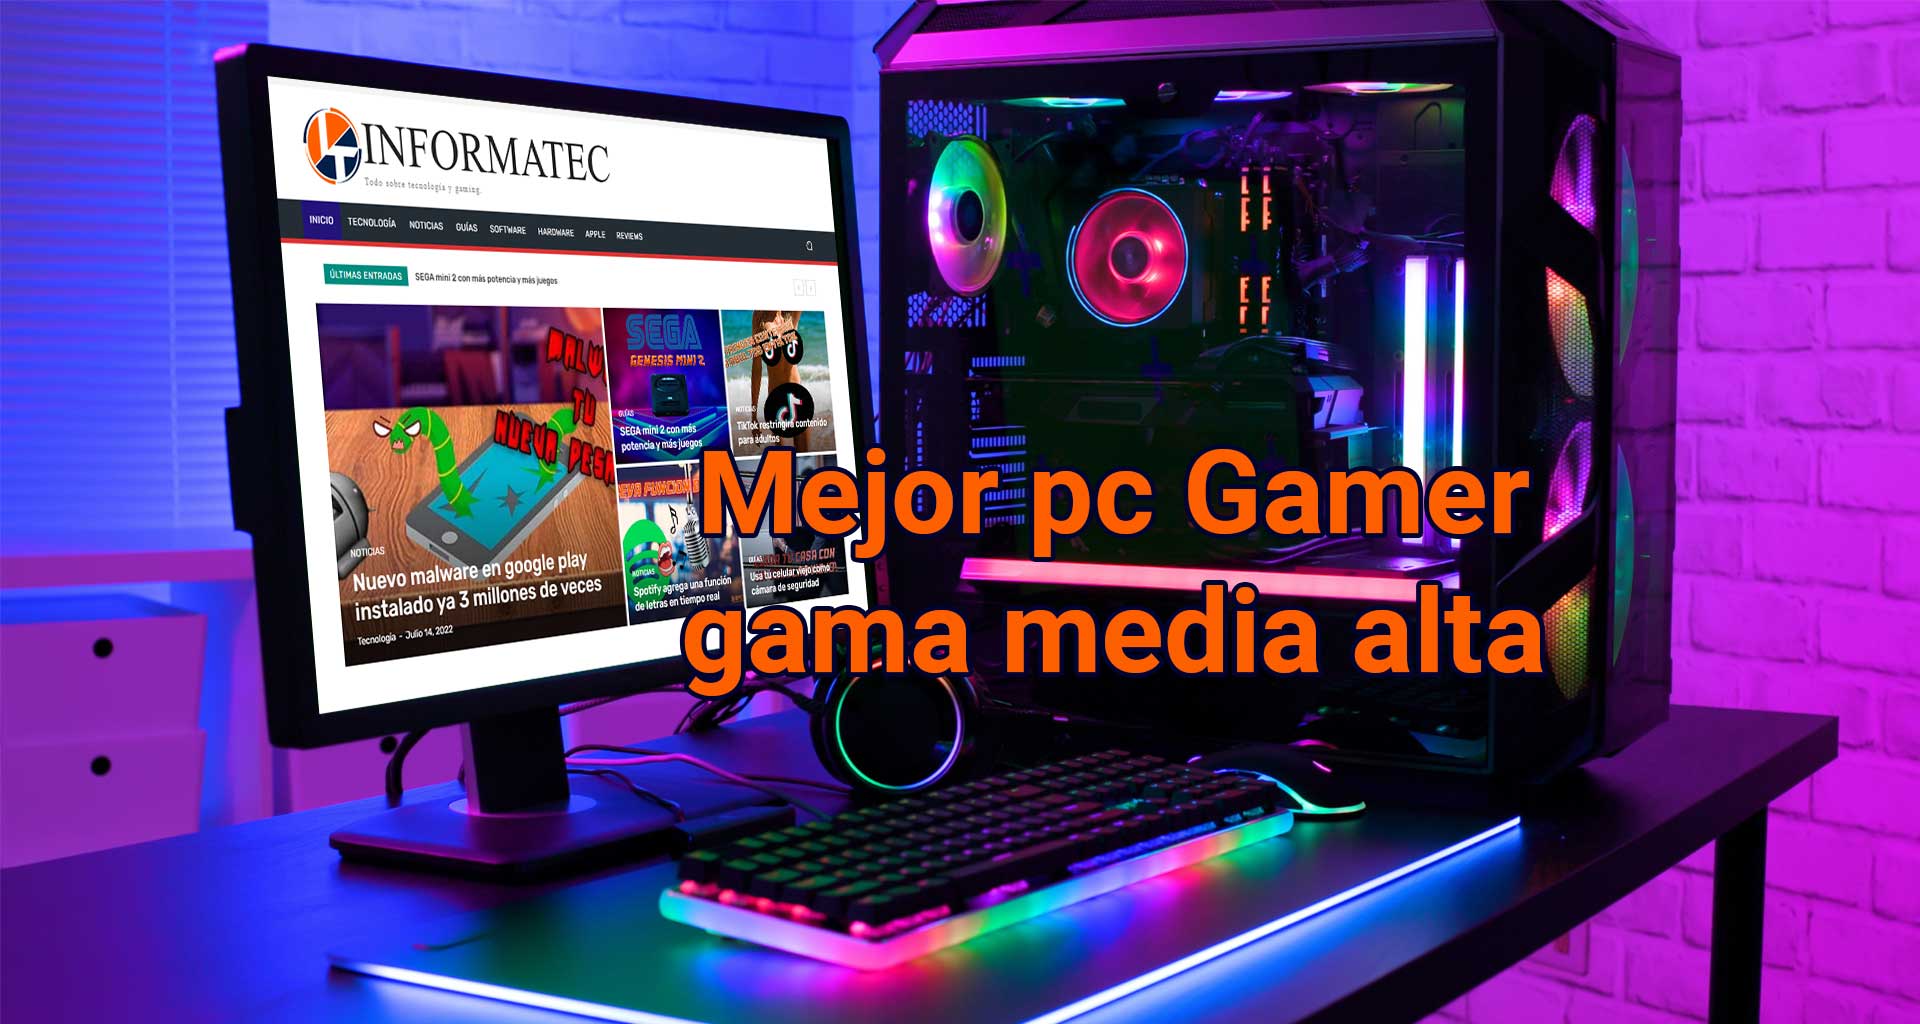 PC gamer gama media alta